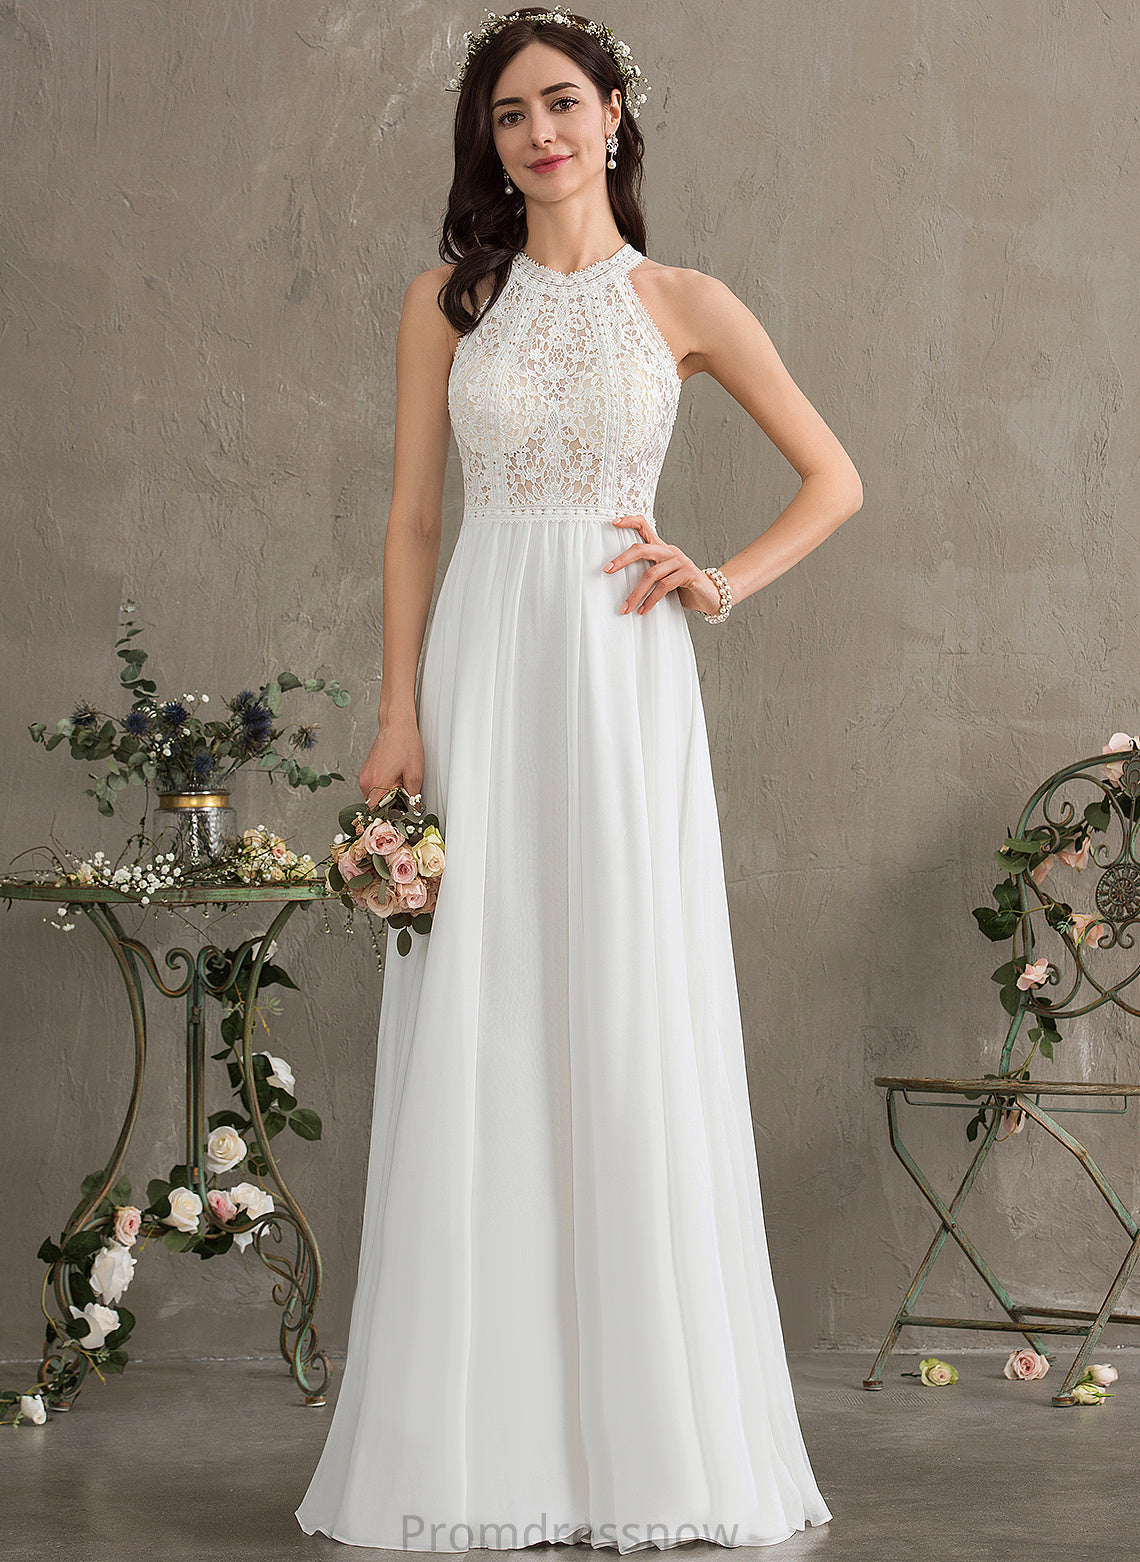 Dress Wedding Dresses A-Line Lace Wedding Meg Floor-Length Chiffon